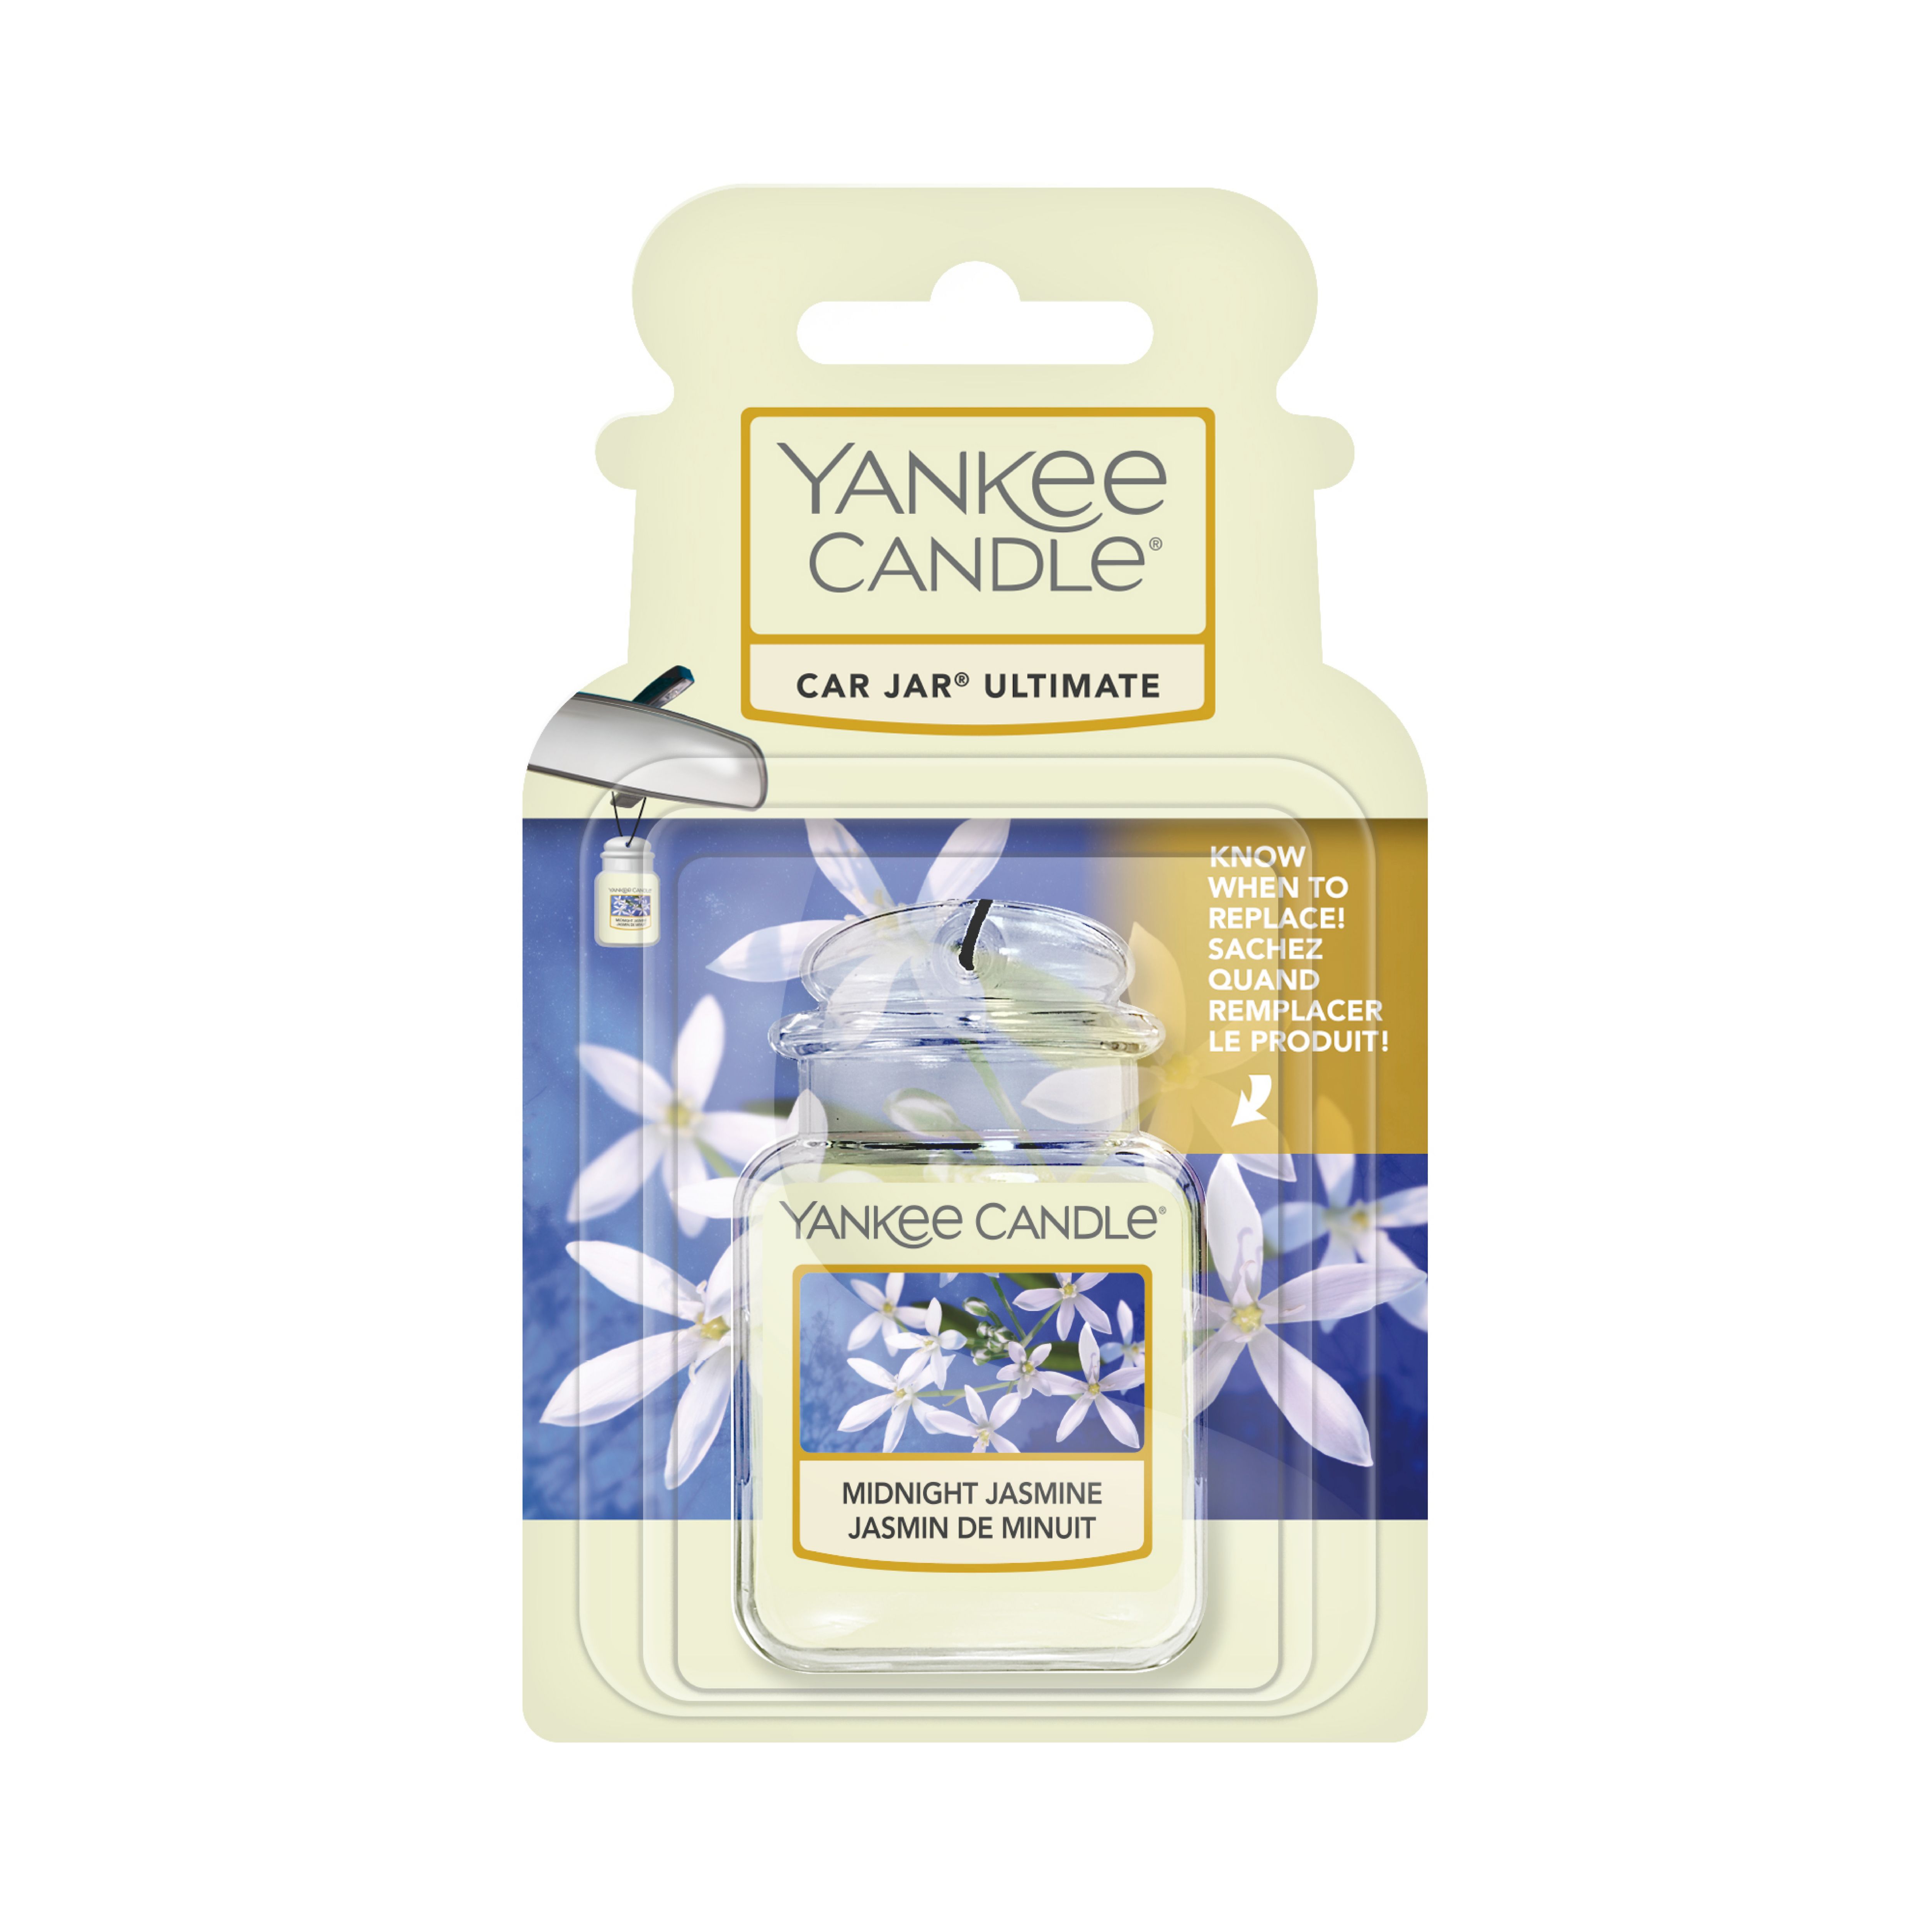 Yankee Candle Clean Cotton Car Jar Ultimate Air Fresheners